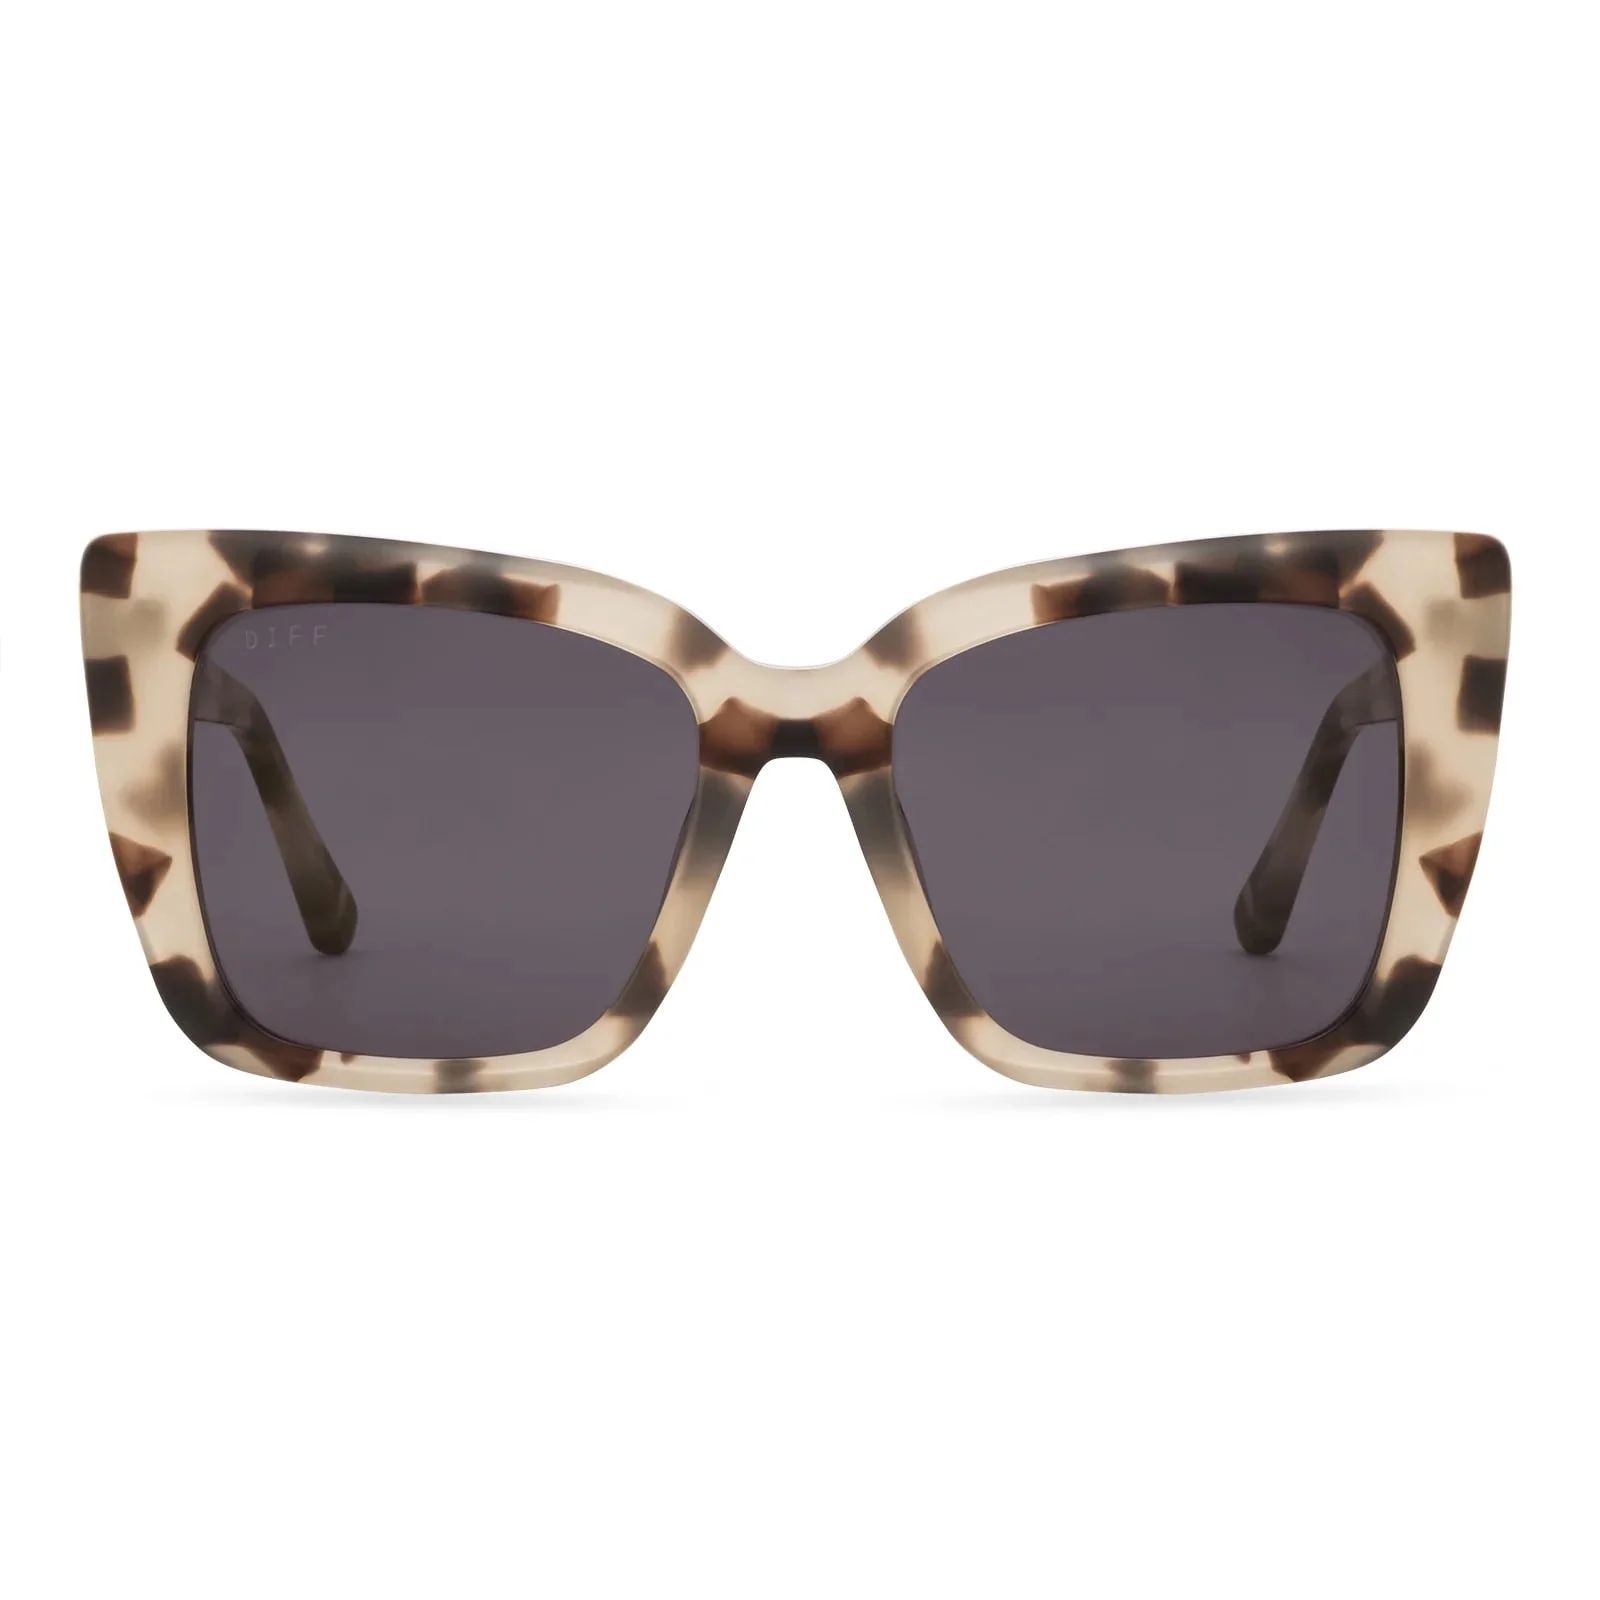 DIFF Lizzy Oversized Sunglasses for Women UV400 Protection Cream Tortoise + Grey | Walmart (US)